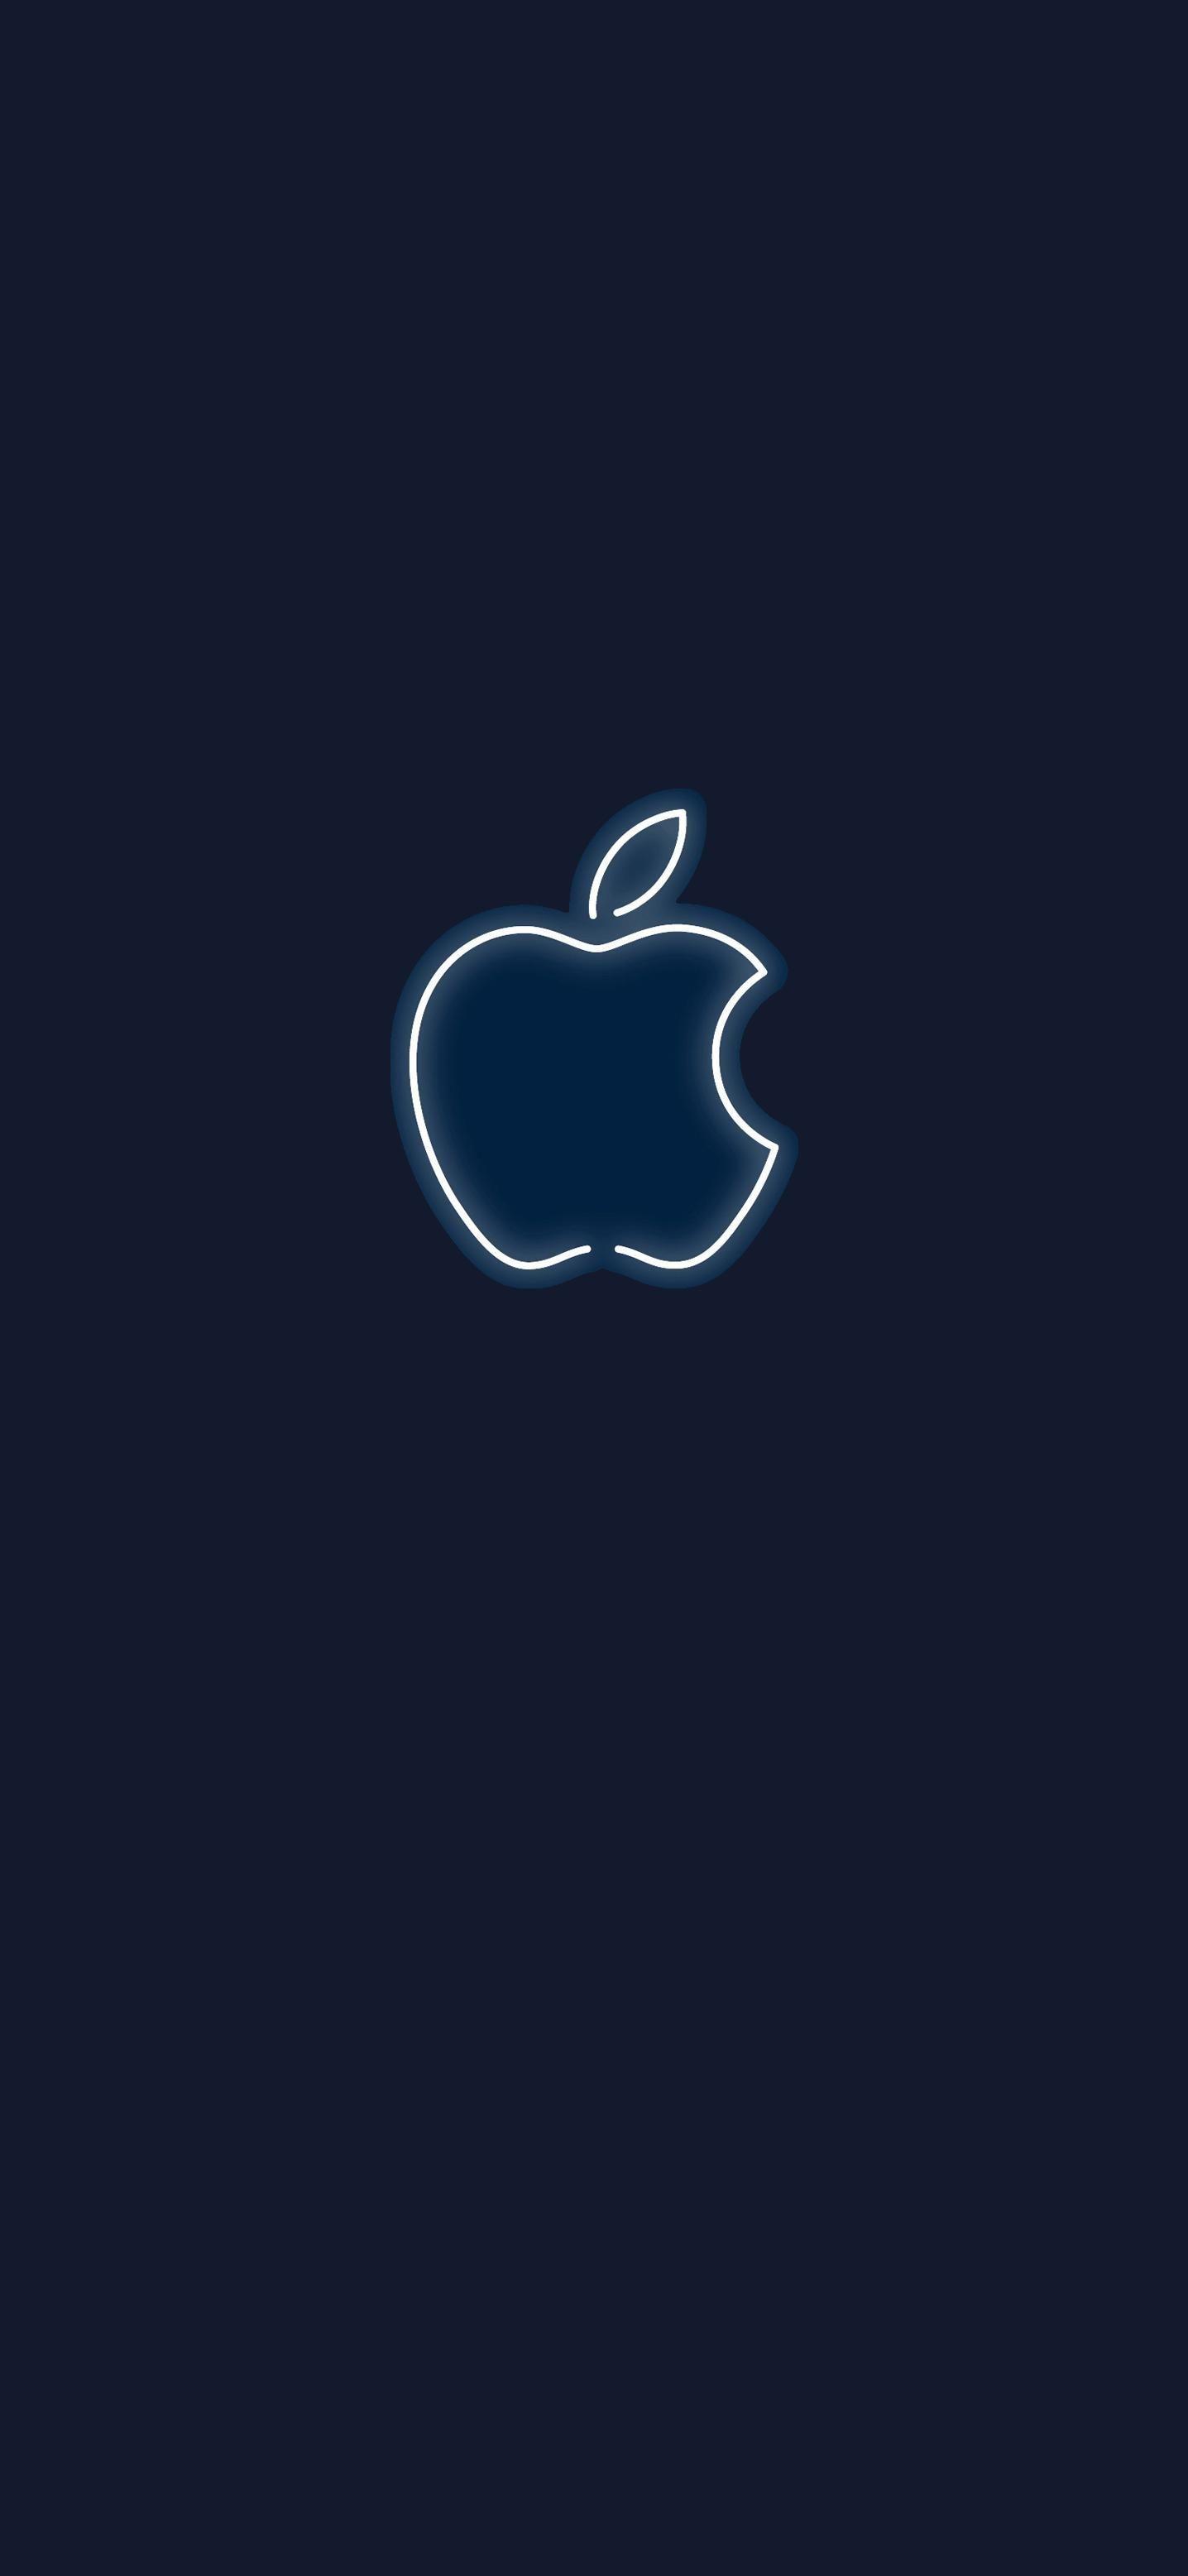 Neon Apple Logo Wallpapers Top Free Neon Apple Logo Backgrounds Wallpaperaccess